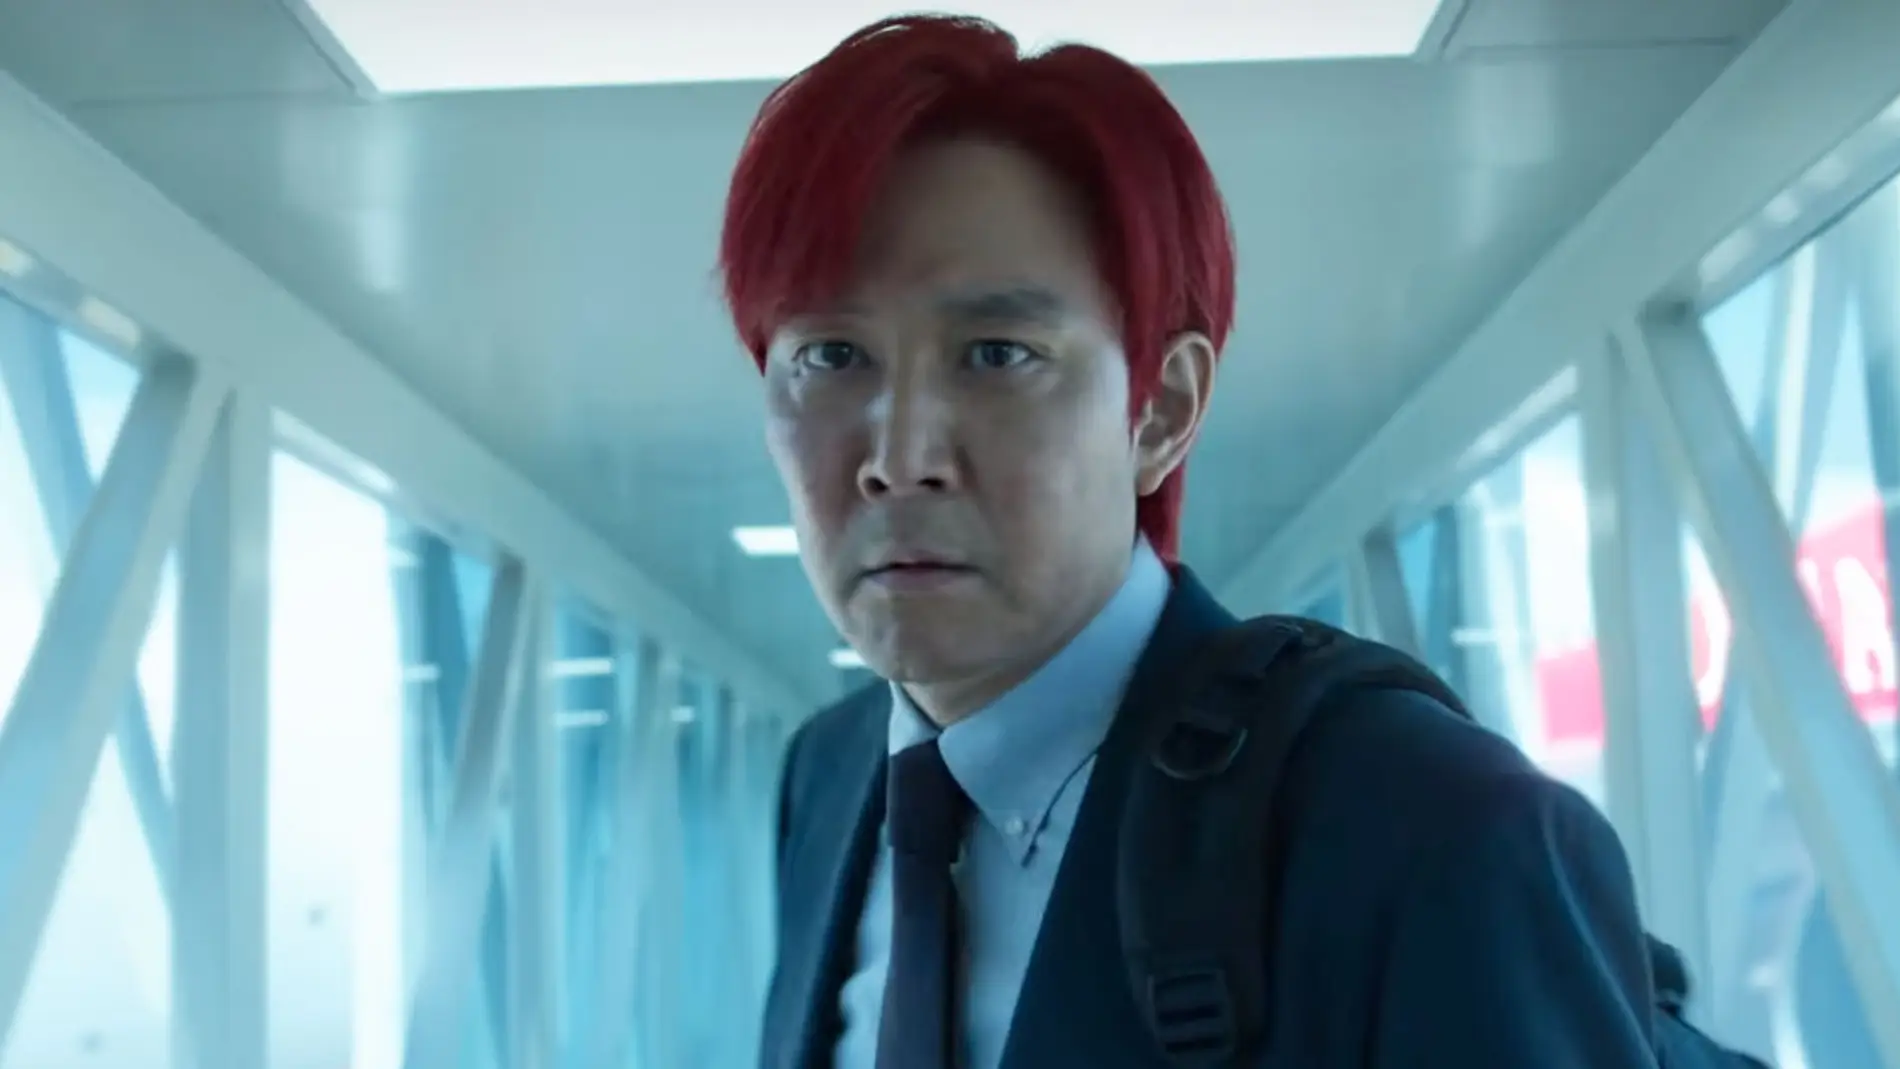 Игра в кальмара 2 дата выйдет. Lee Jung Jae игра в кальмара. Игра в кальмара красные волосы. Сон Кан Хо игра в кальмара.